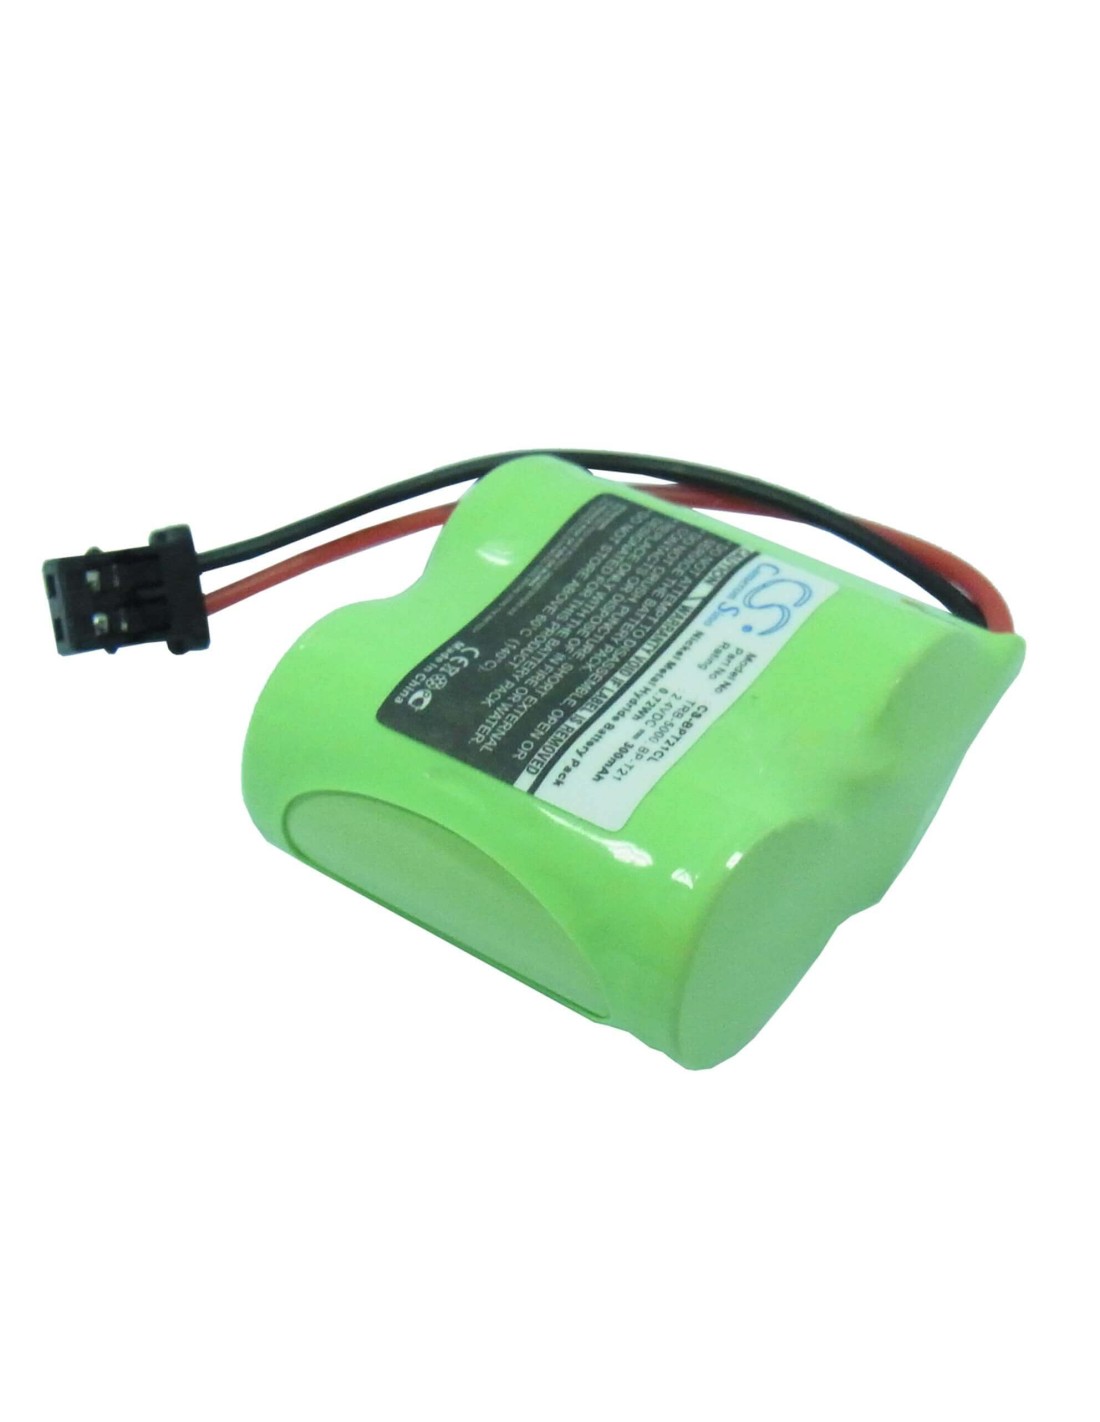 Battery for Memorex, Mph-6050, Mph-6250, Mph-6250bat, Mph-8250 2.4V, 300mAh - 0.72Wh